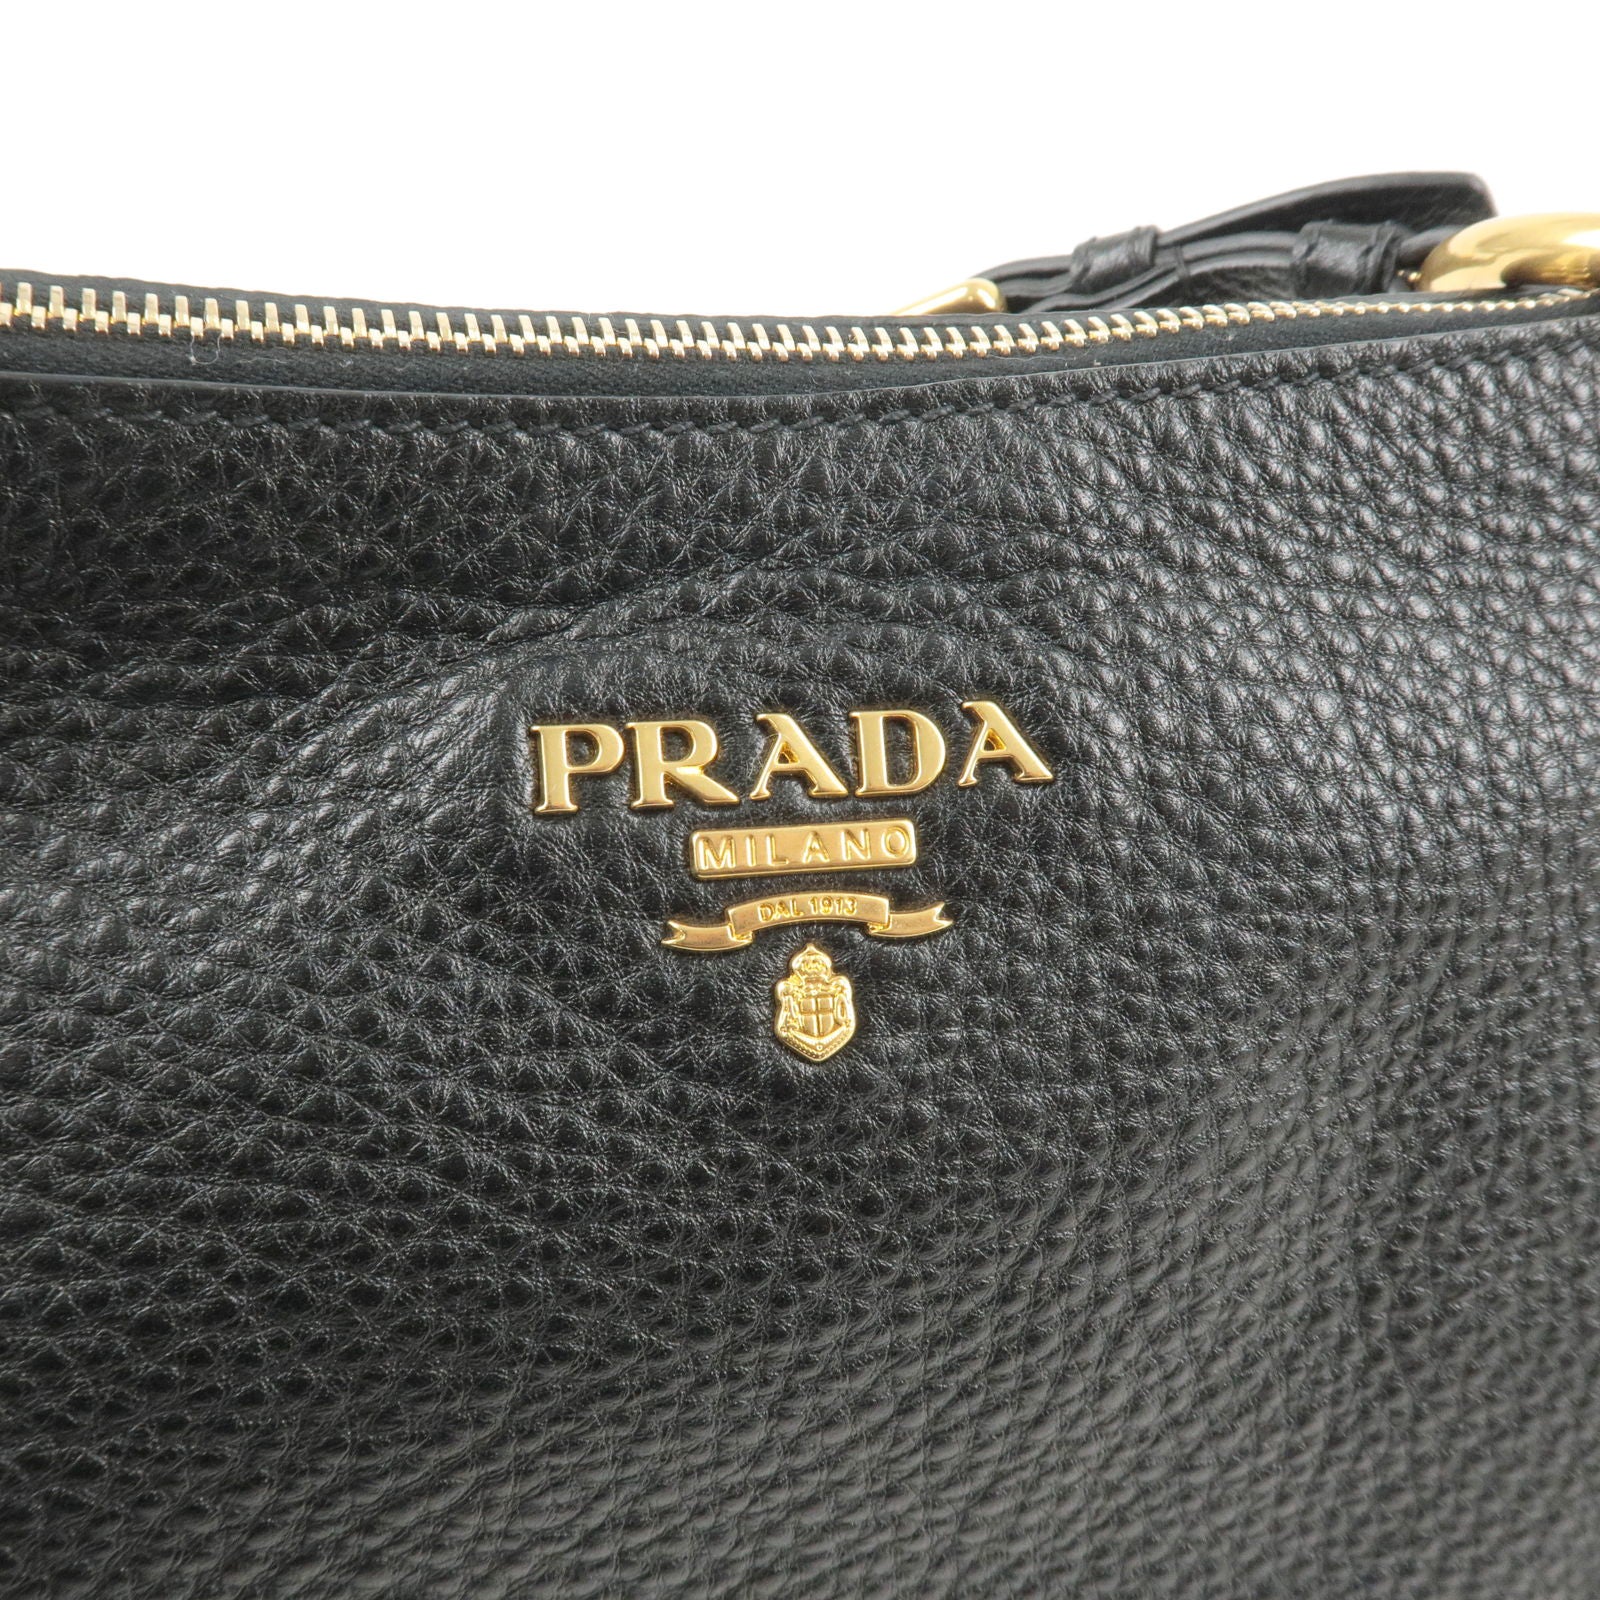 PRADA - Shoulder - Black - Mochila Prada Re-nylon en lona negra - NERO -  Hand - Bag - Bag - ep_vintage luxury Store - BR4894 – dct - Leather